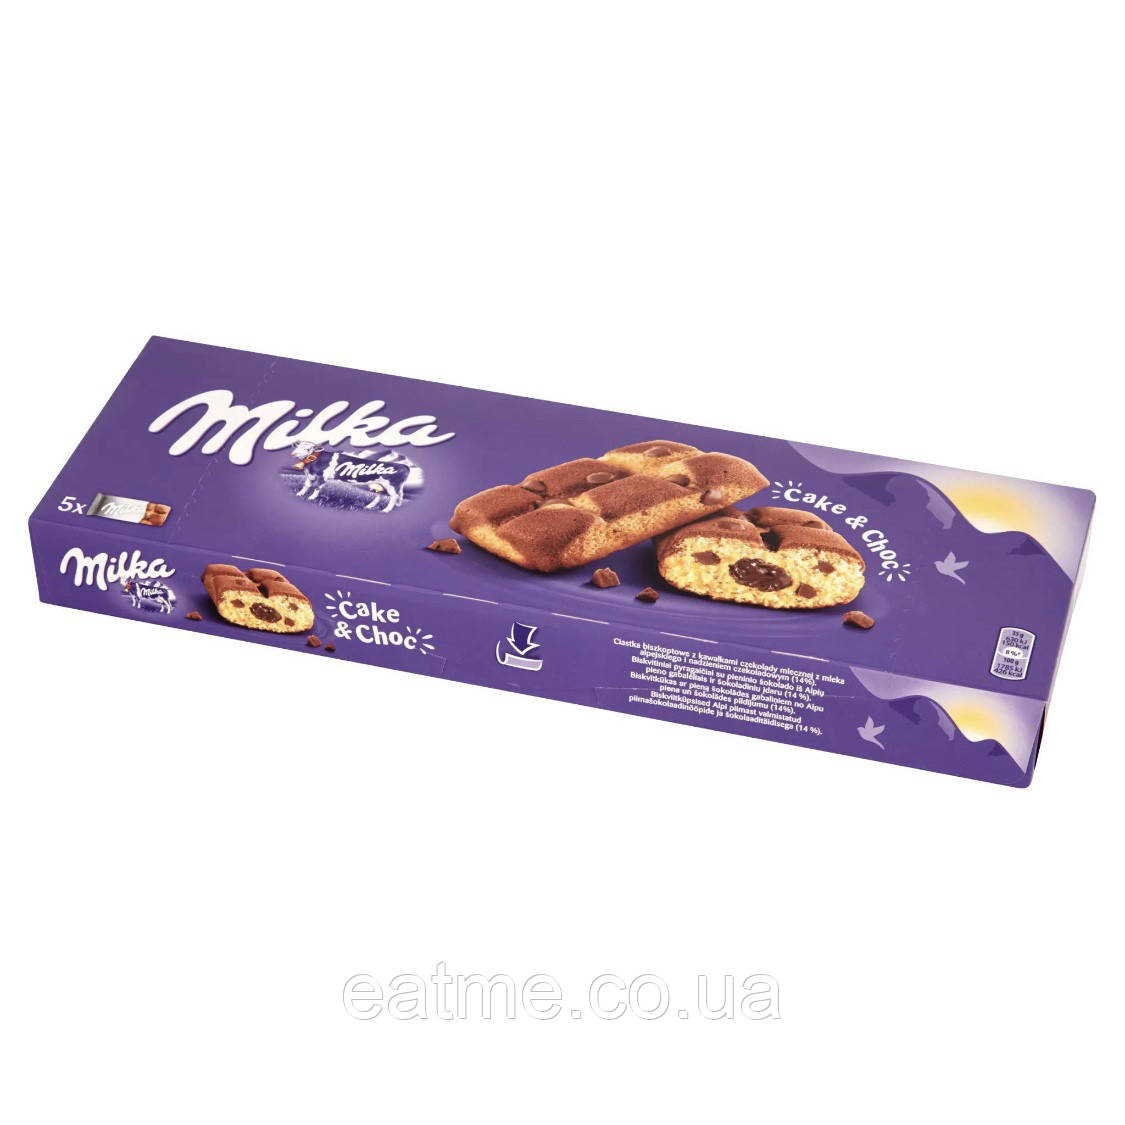 Biscuits cake chocolat Milka 175g - Drive Z'eclerc